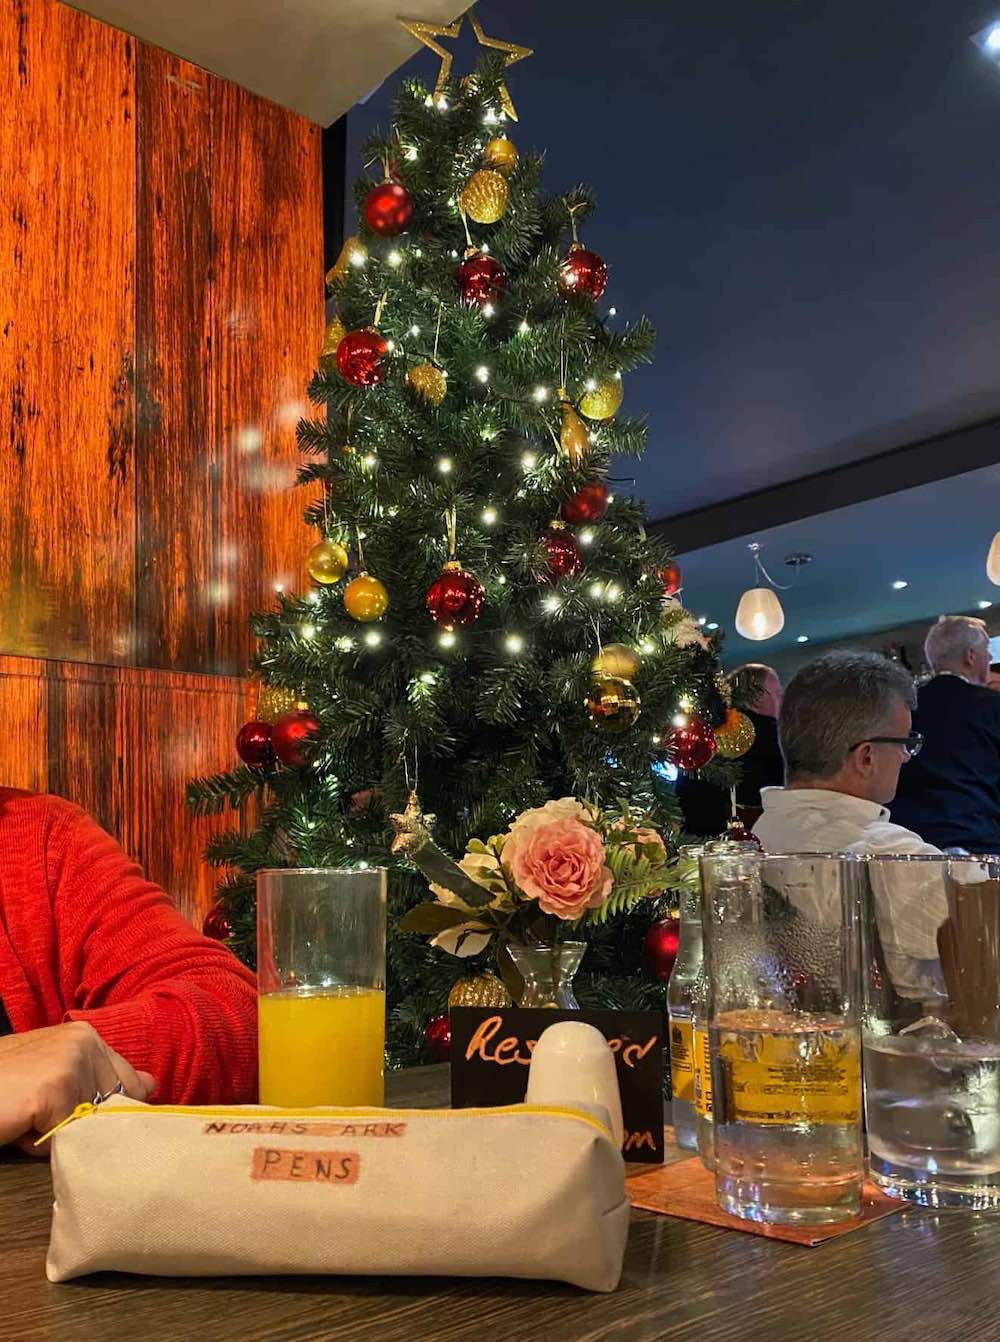 Christmas tree, drinks, interior of pub